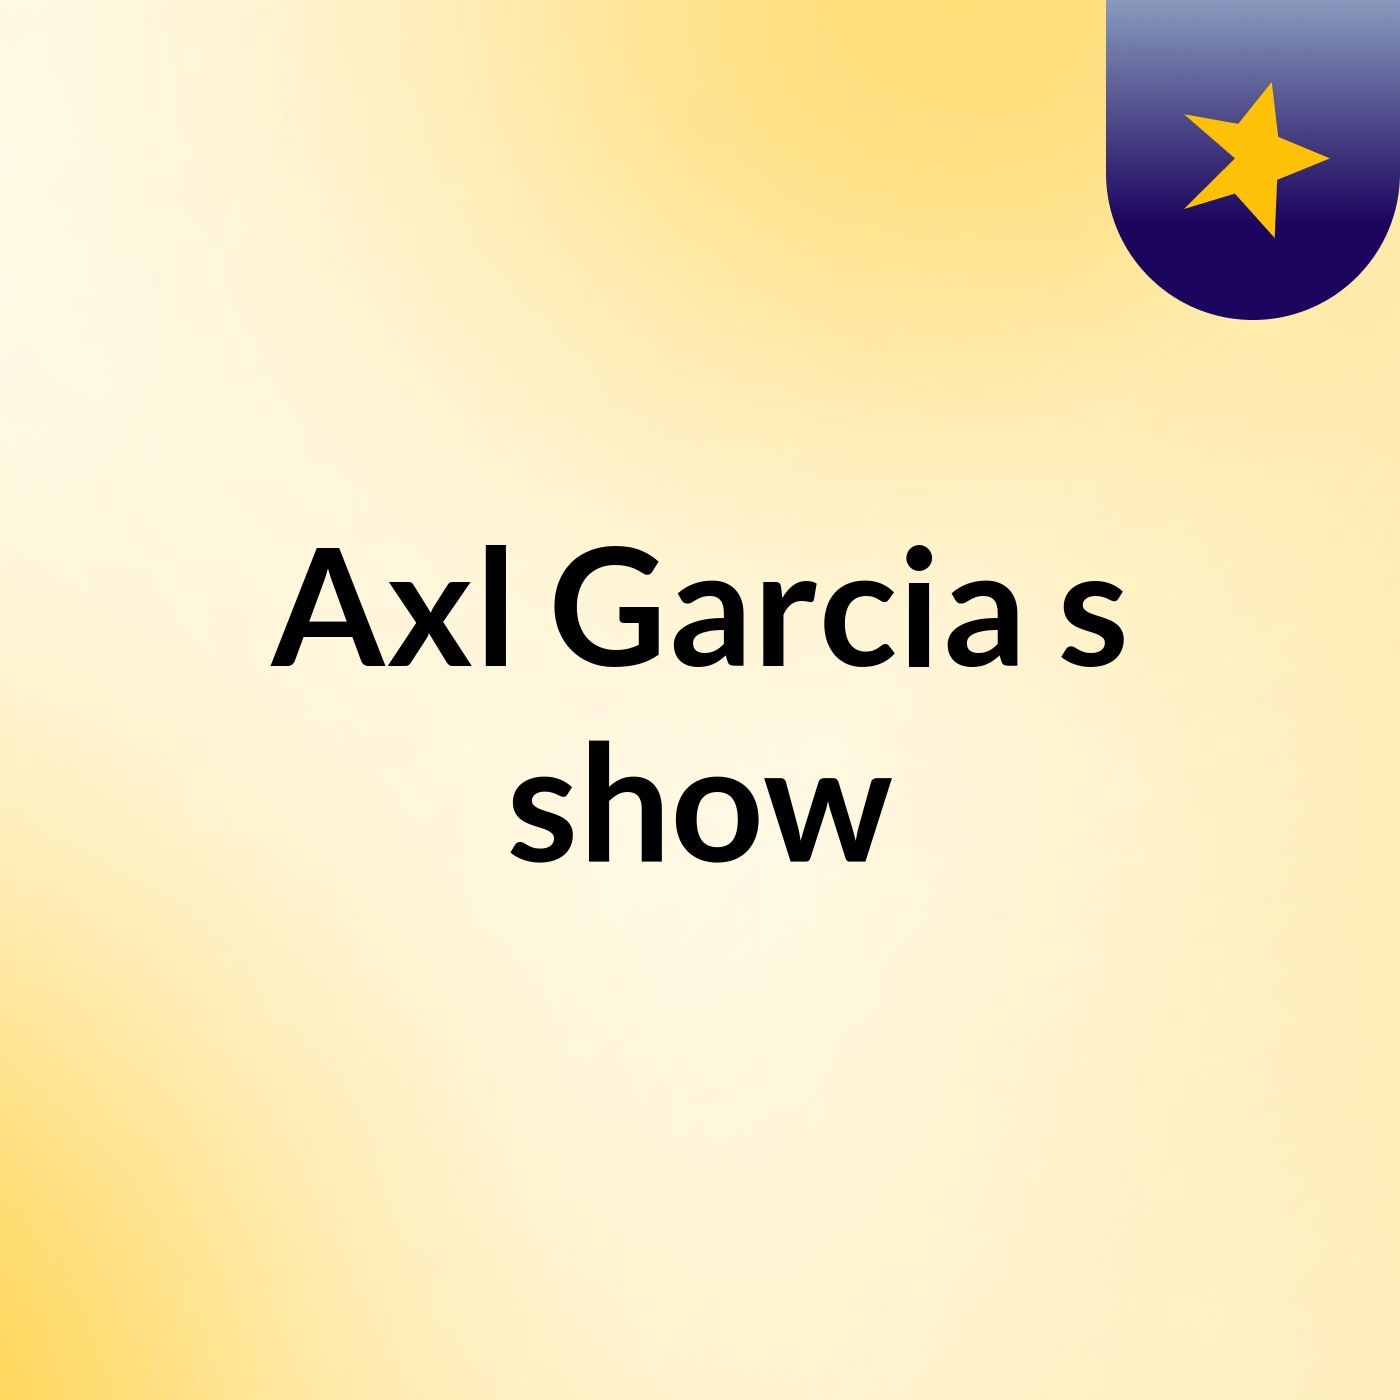 Axl Garcia's show